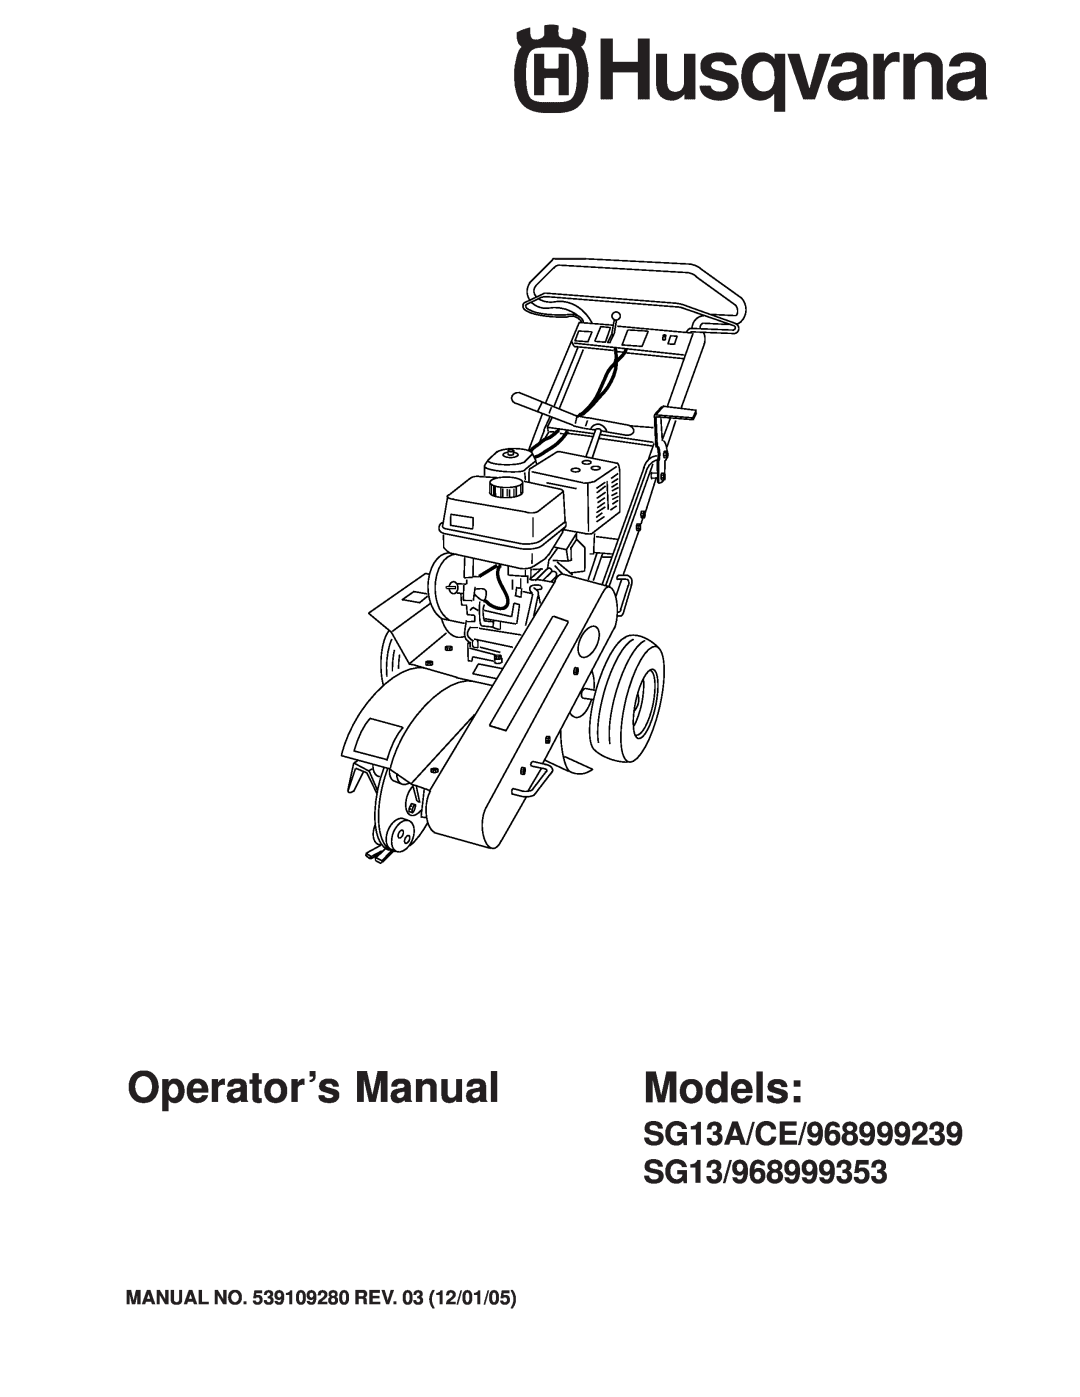 Husqvarna SG13/968999353 manual SG13A/CE/968999239, MANUAL NO. 539109280 REV. 03 12/01/05, Operator’s Manual, Models 